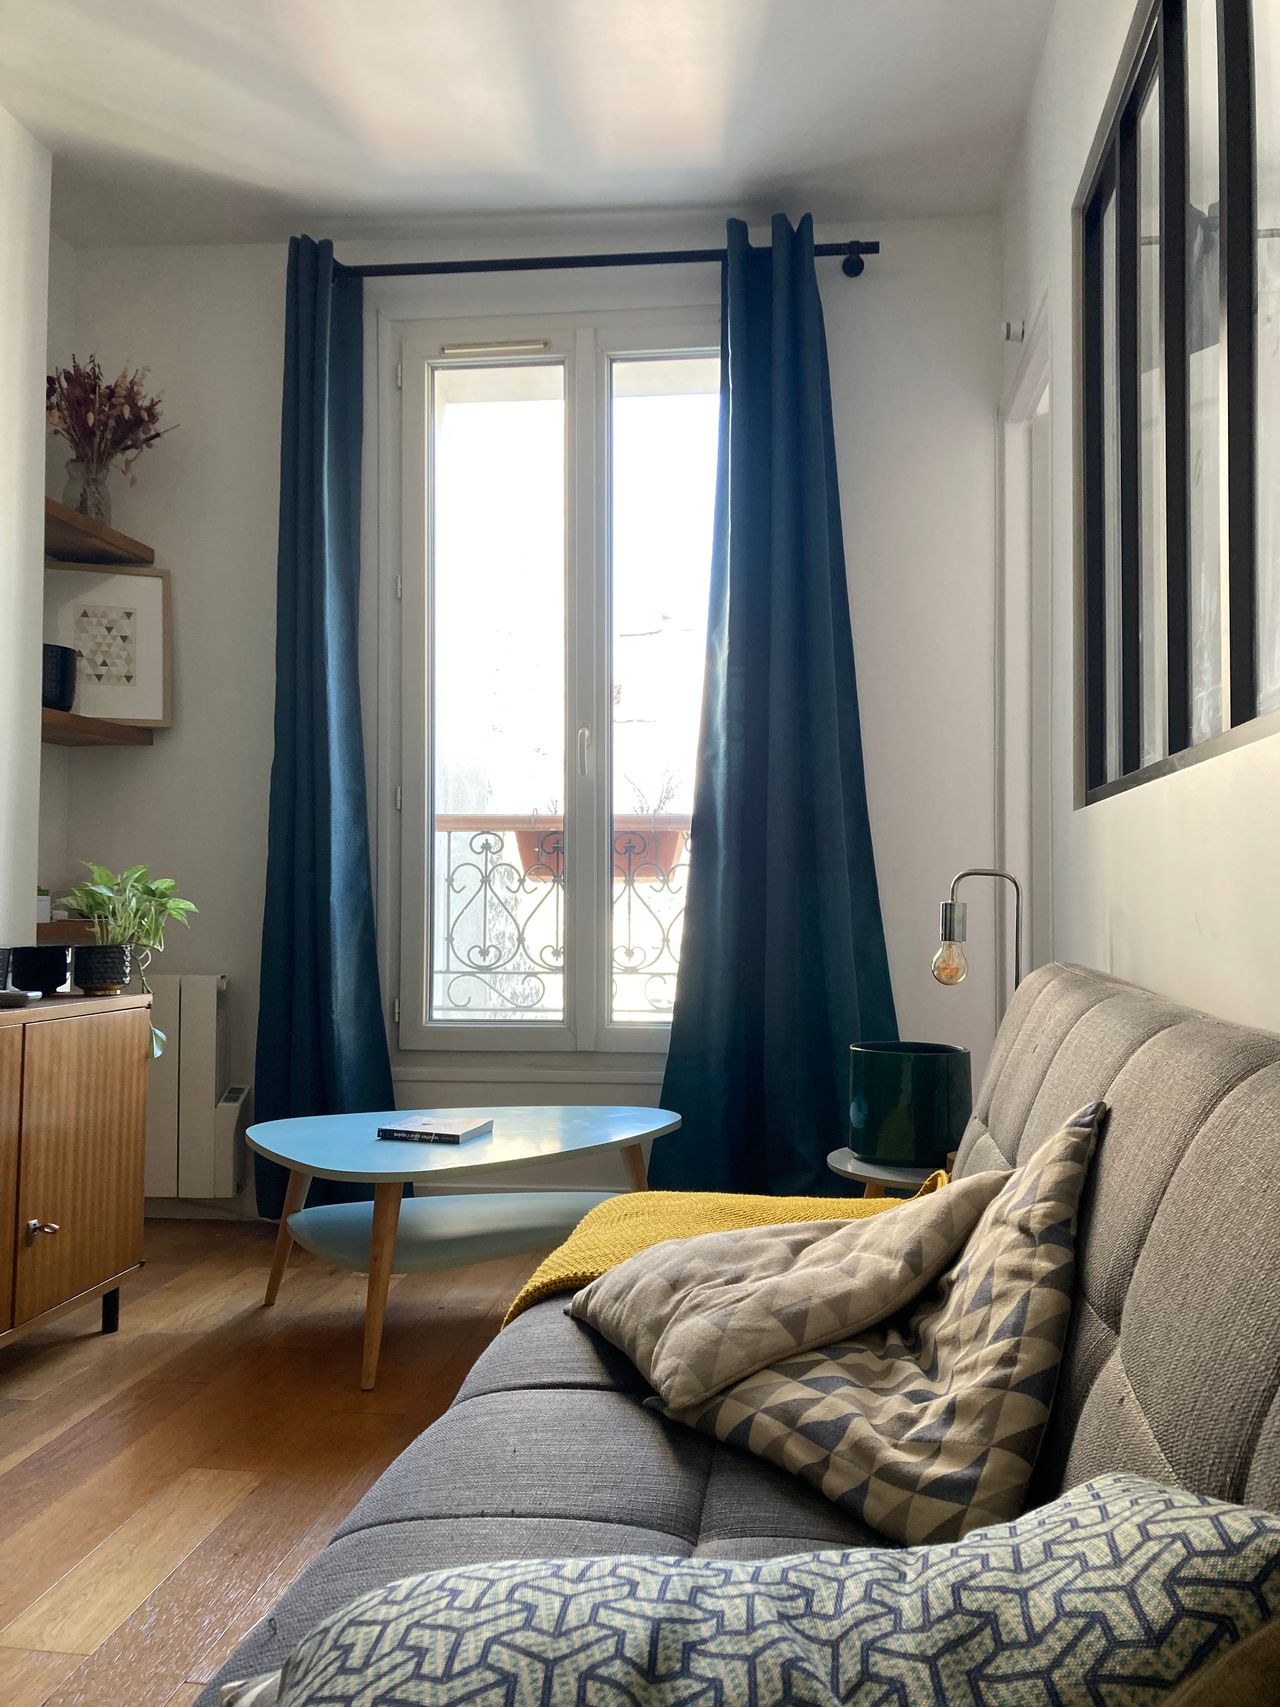 Rental furnished flat T2 35m² between Jules Joffrin and Porte de Clignancourt - quiet and bright - Paris 18ème